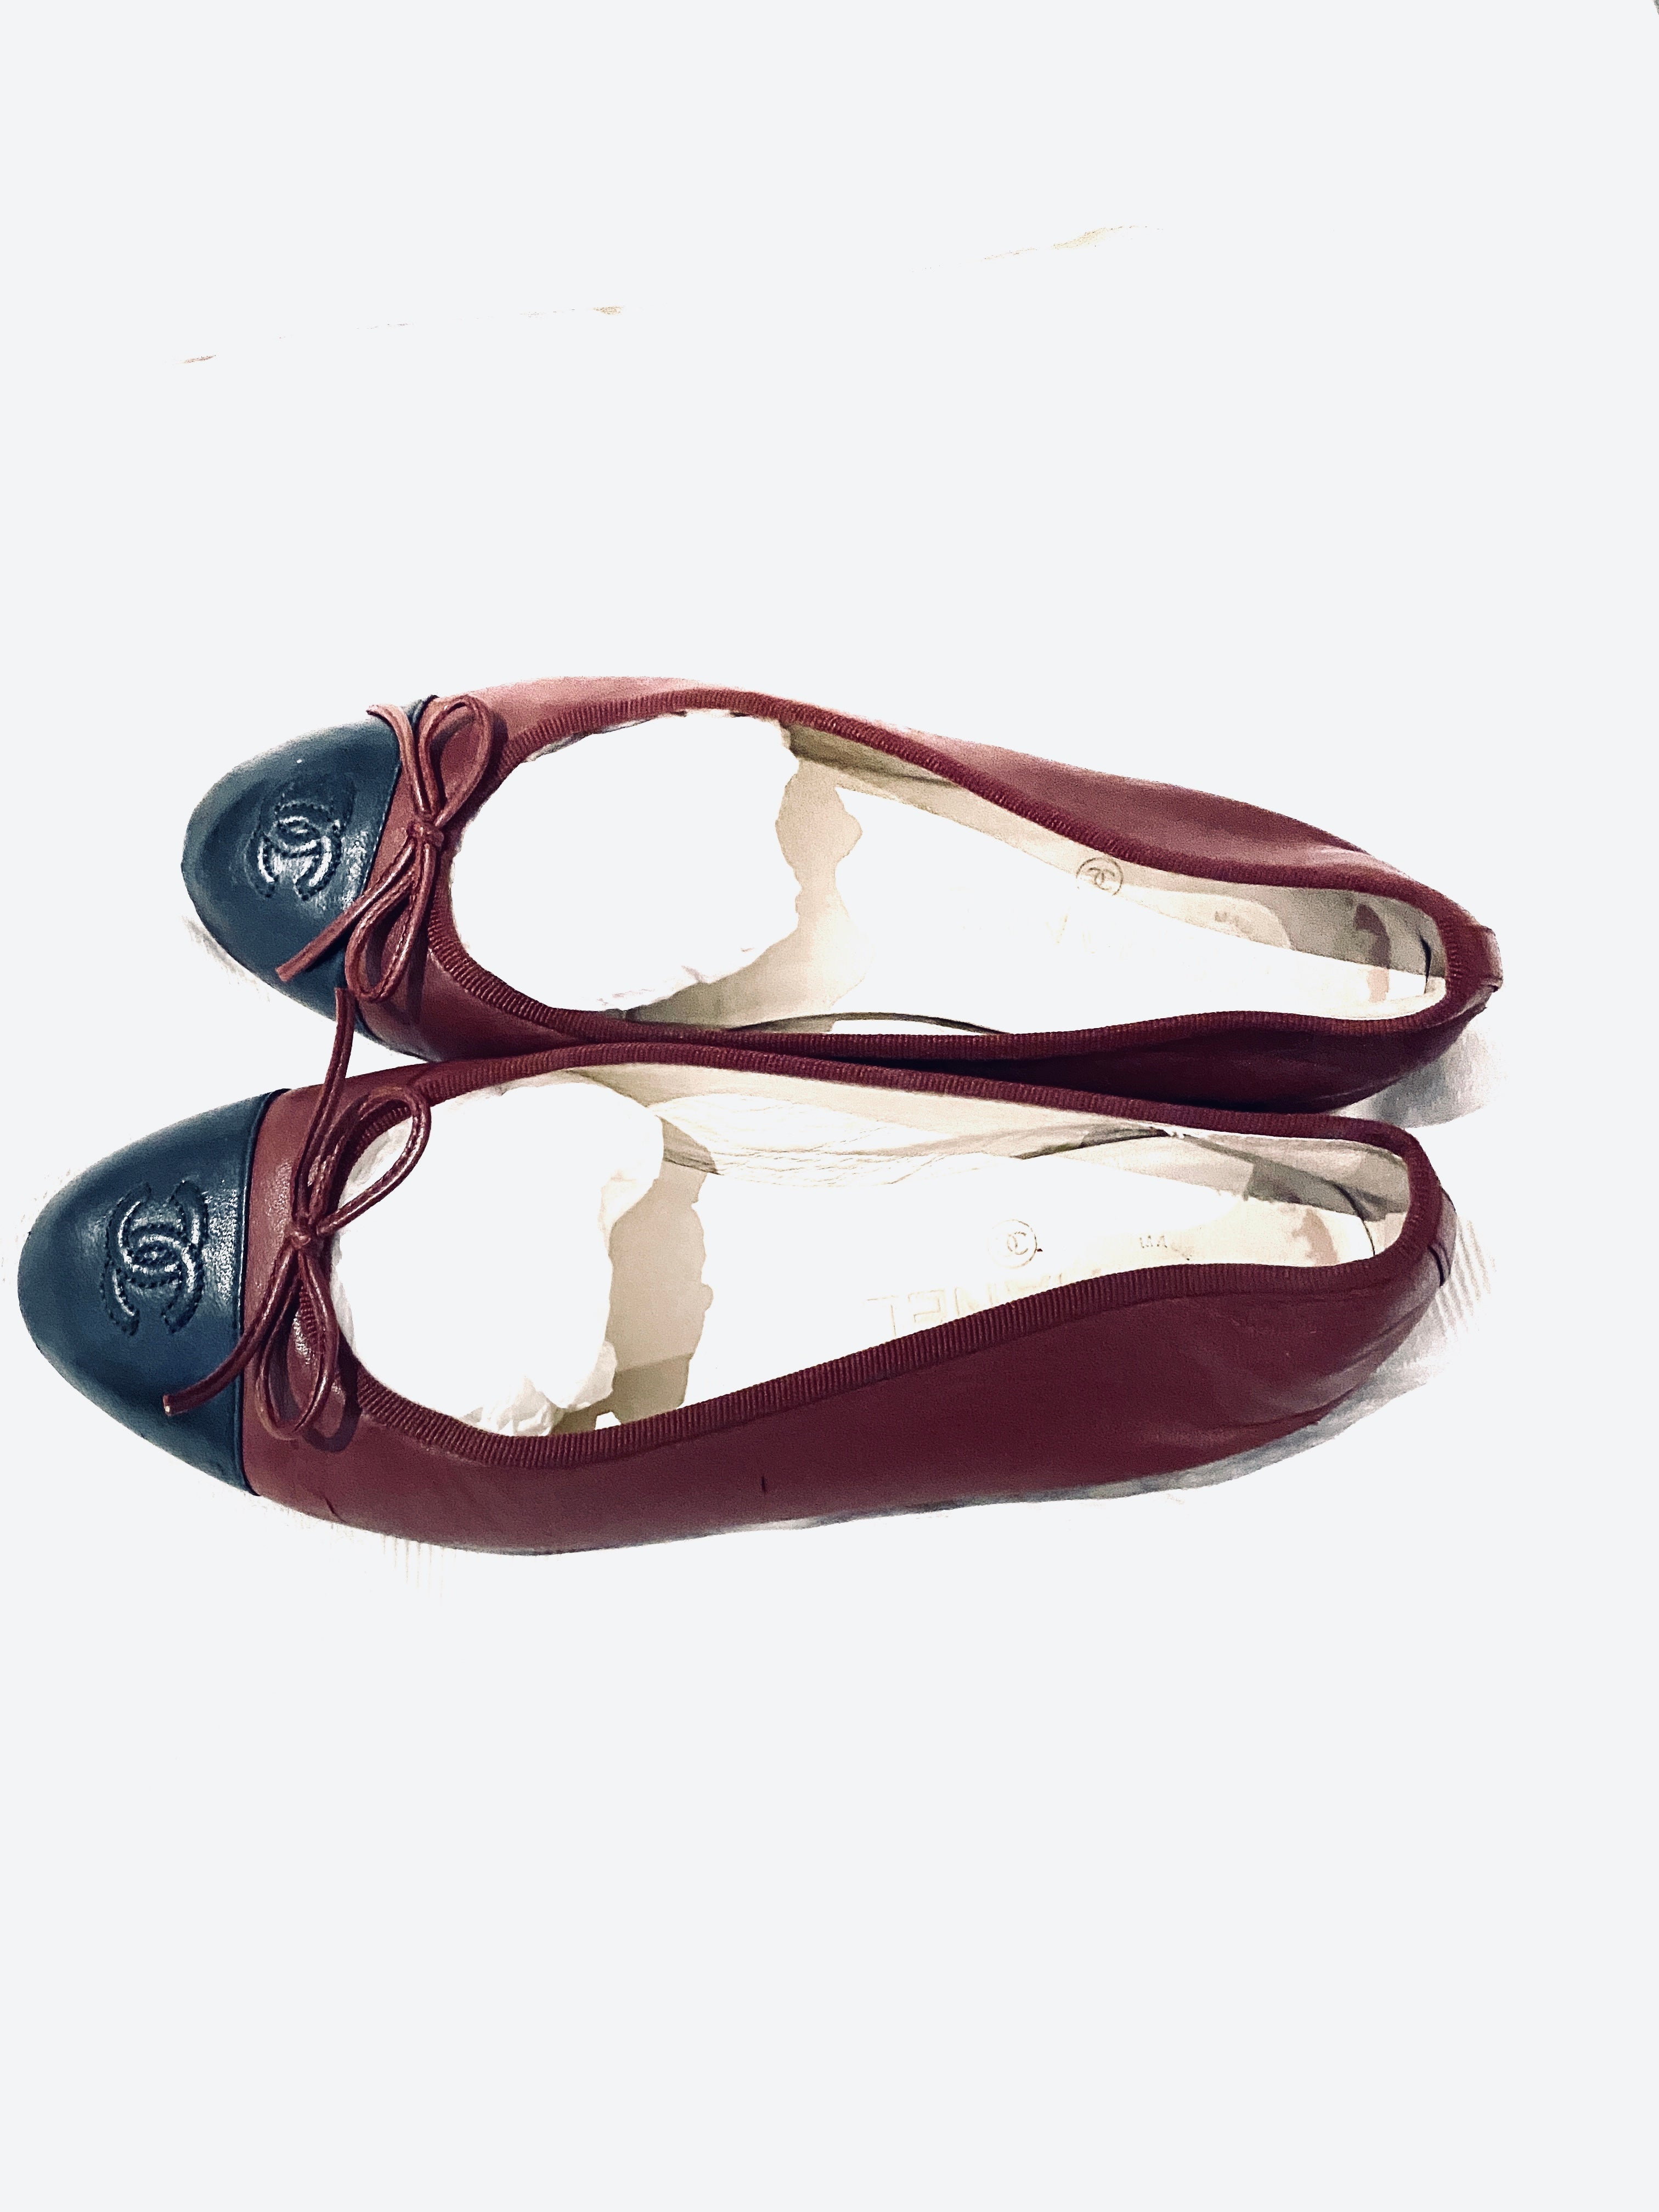 Women's Ballet Flats Shoes Online Store